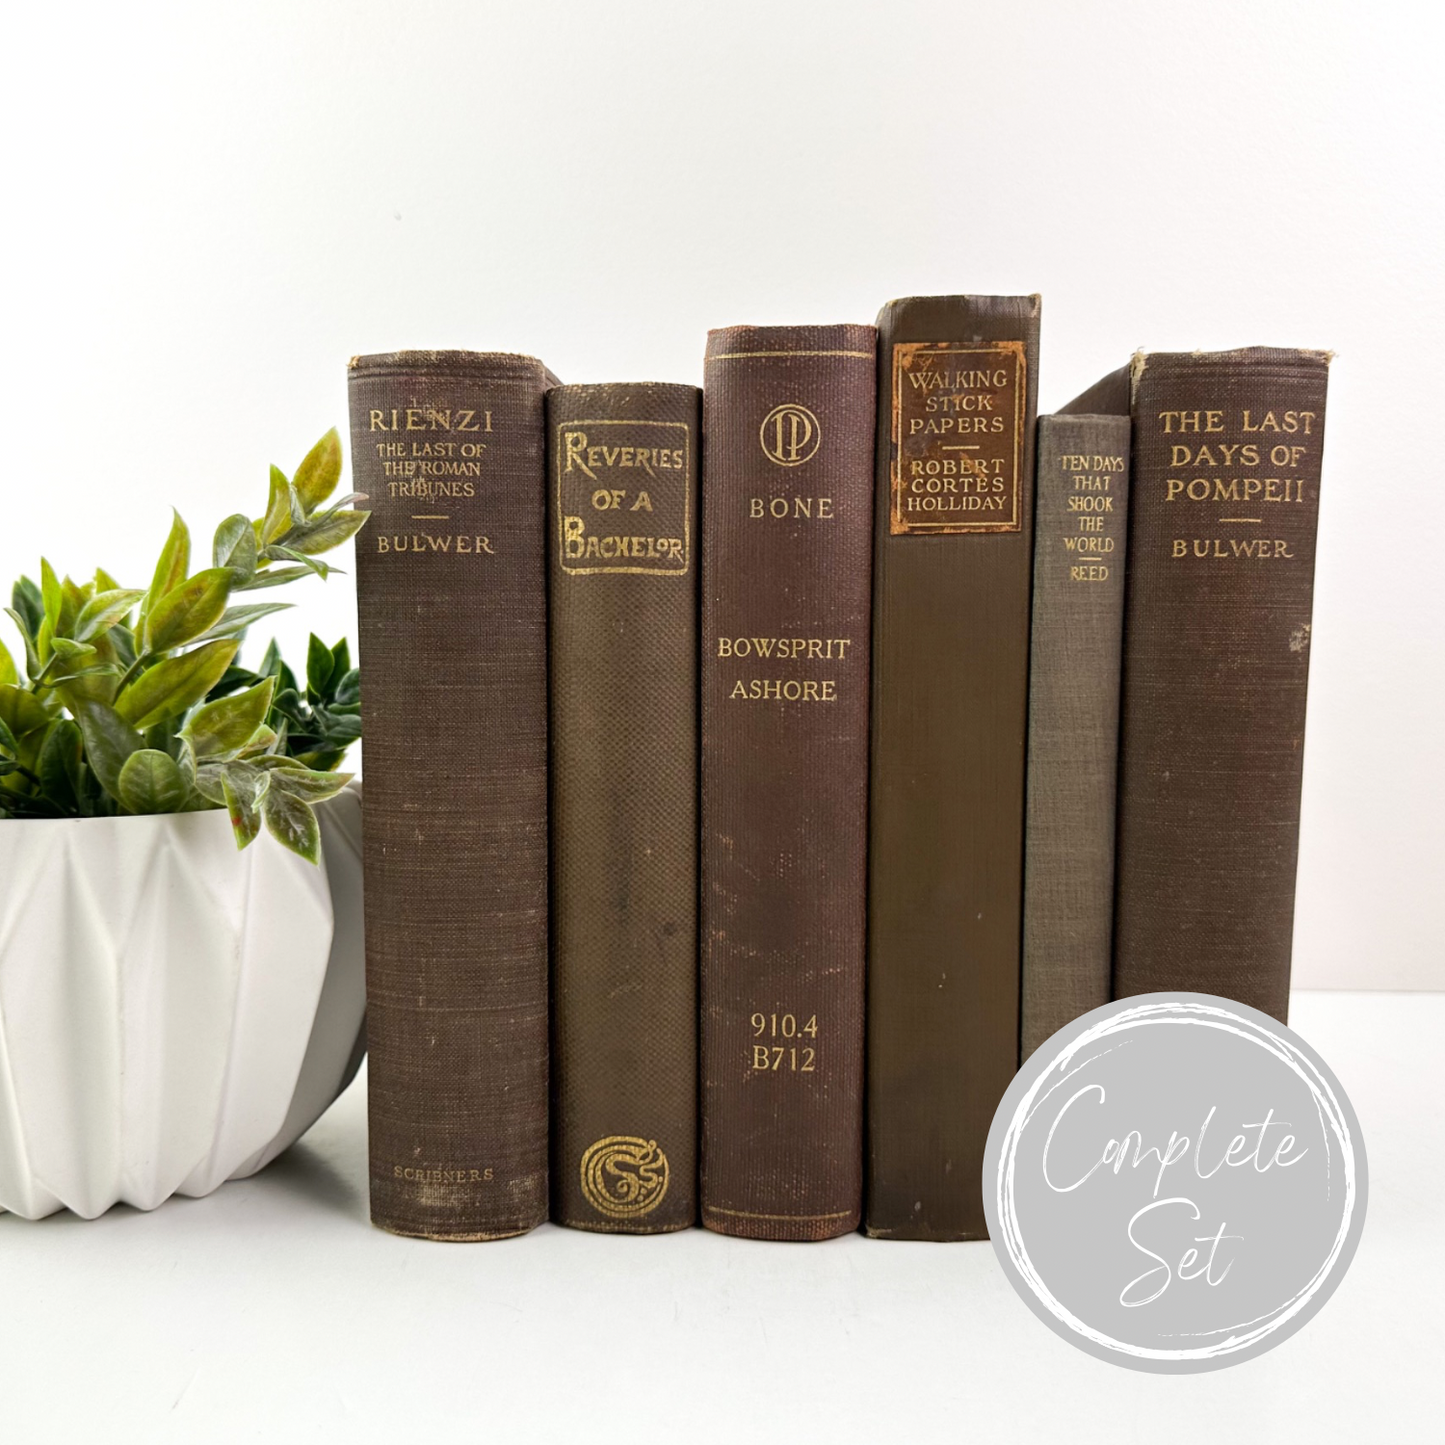 Classic Shelf Design with Brown Books